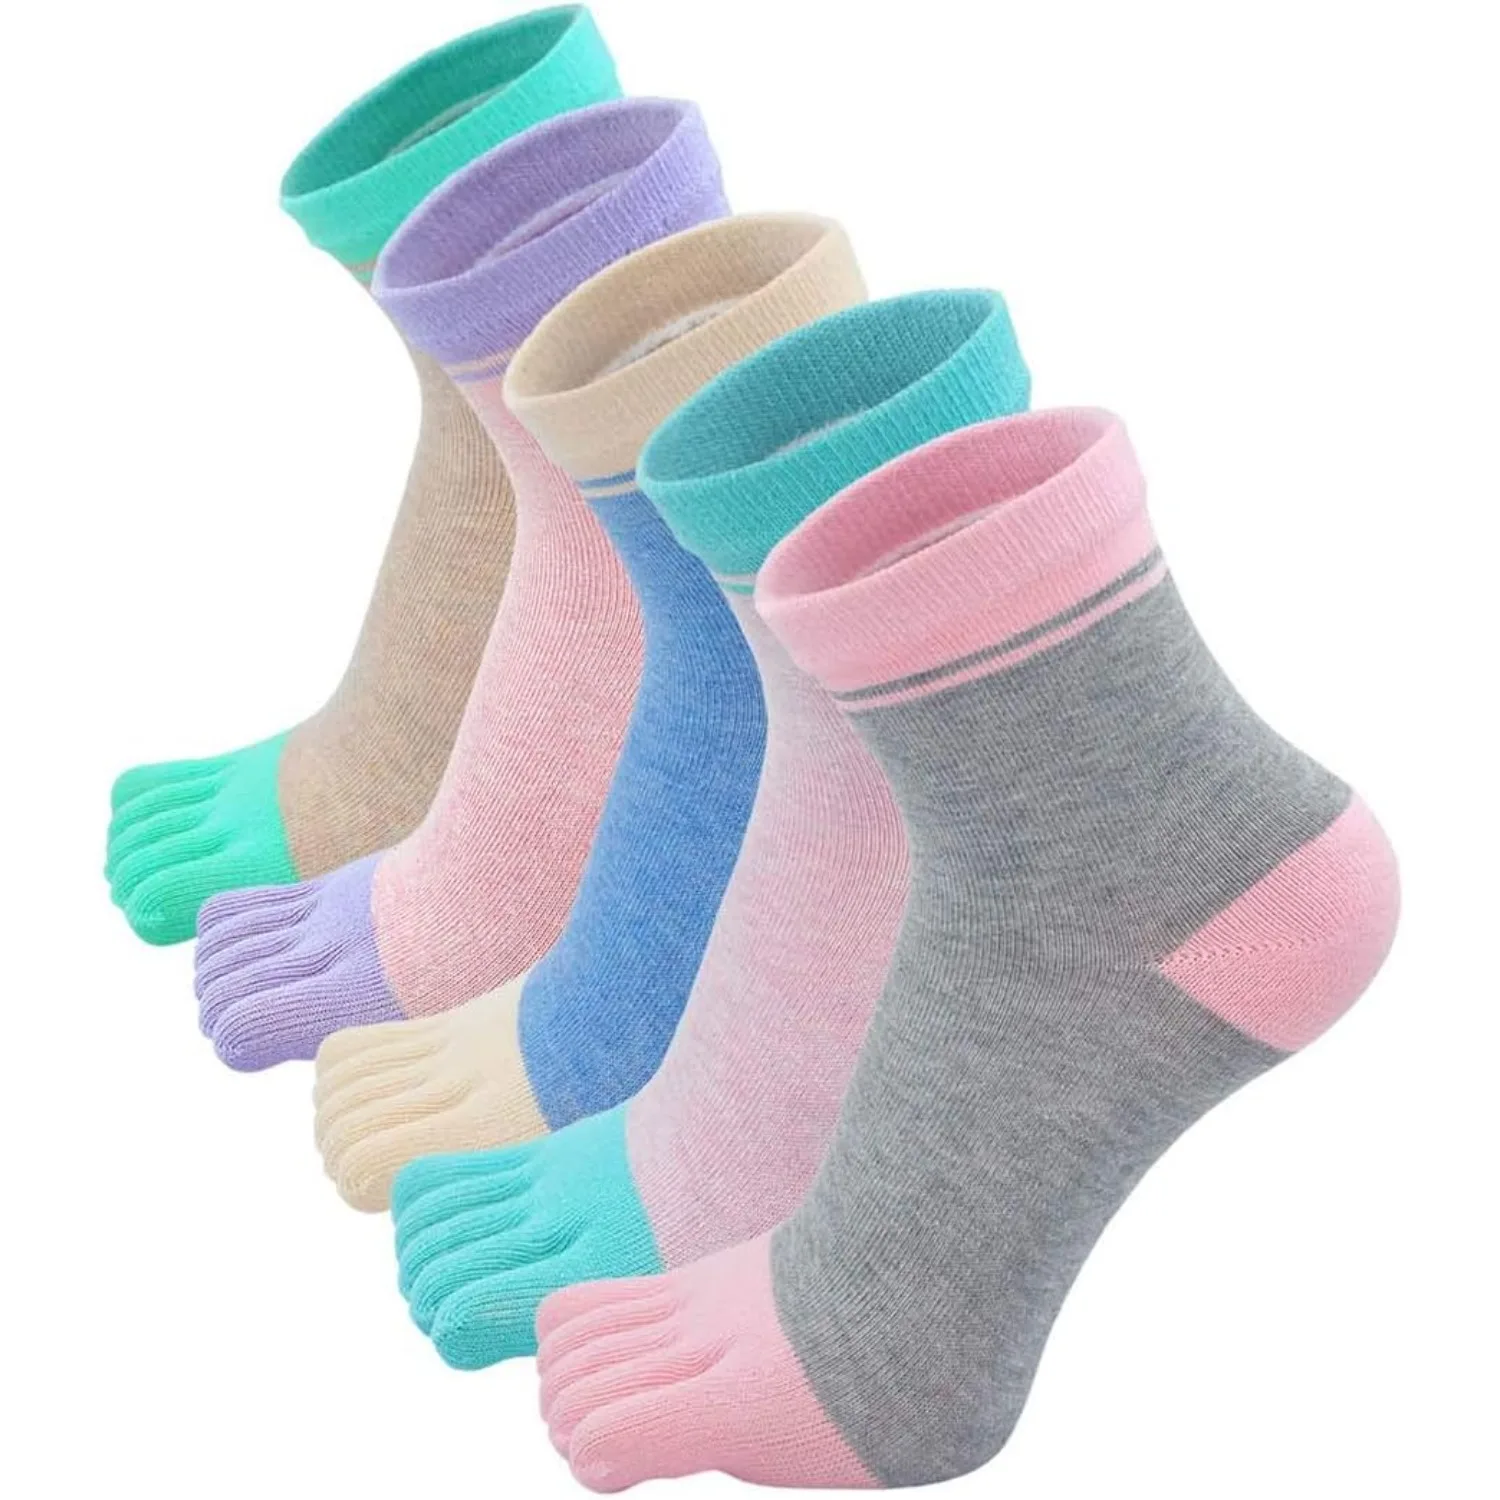 

New Women Toe Socks Funny Five Fingers Socks Colorful Striped Printed Cotton Breathable Women's Crew Socks Athletic Running Sock